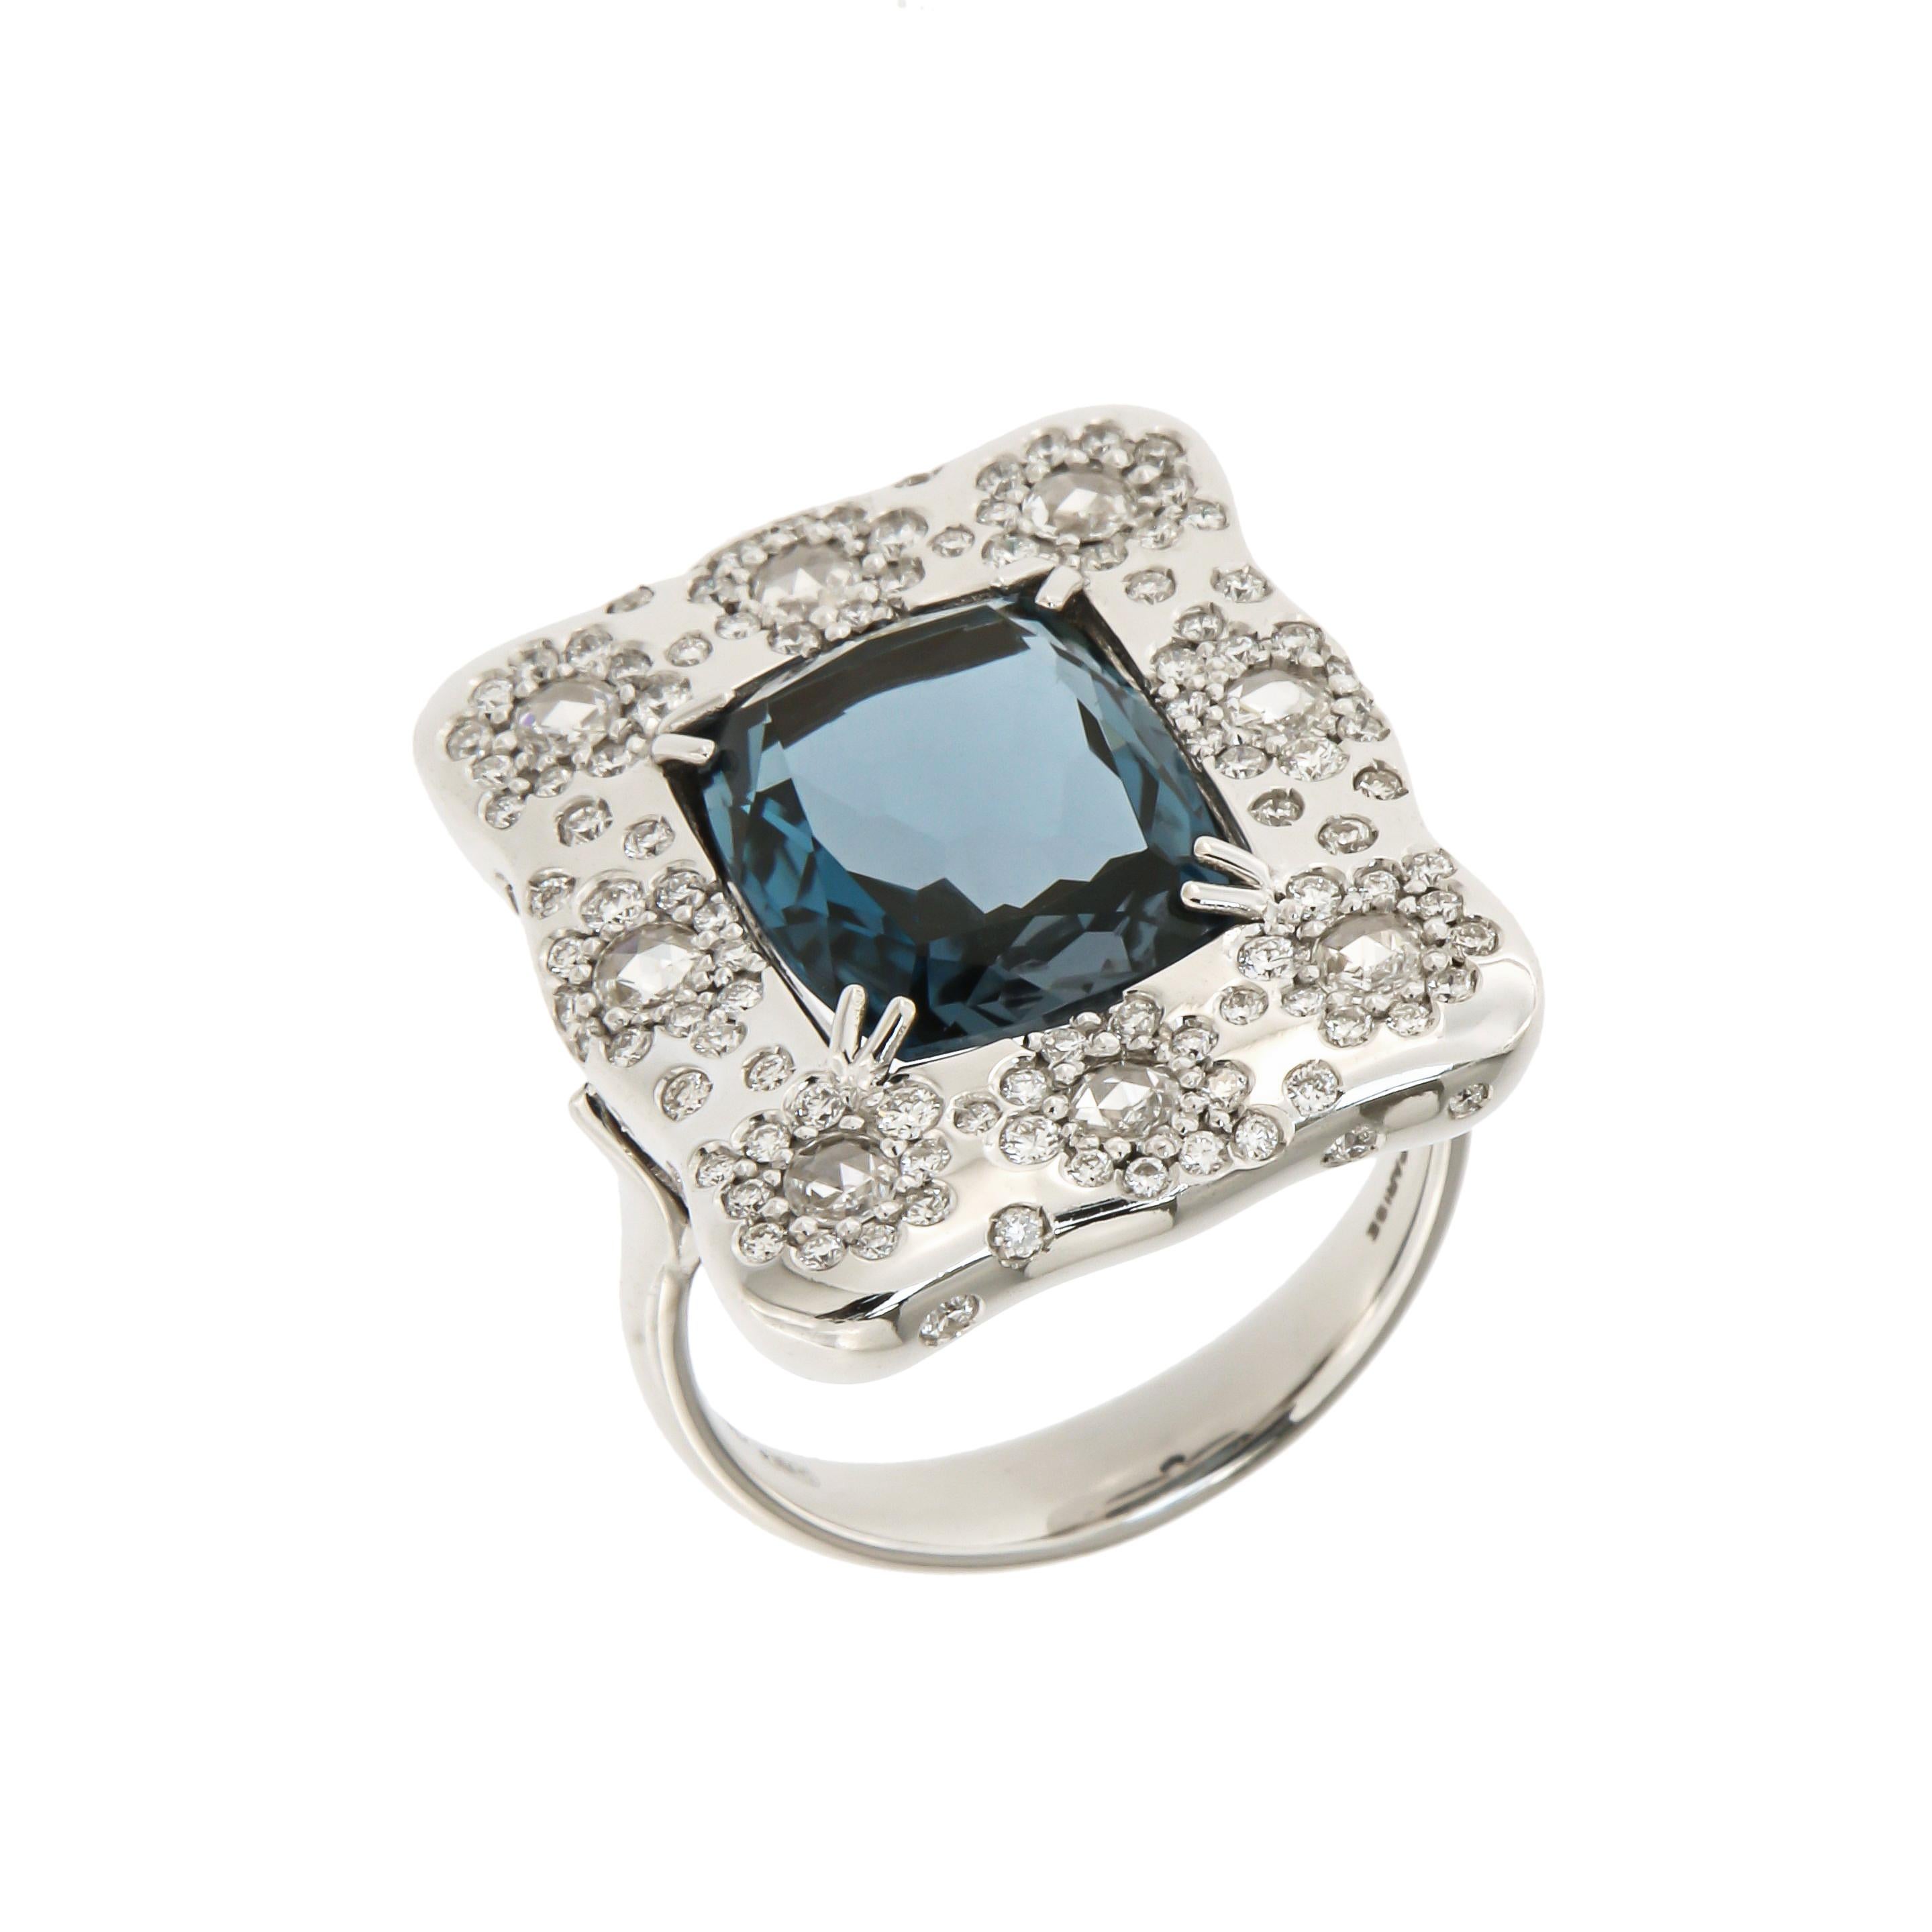 Antique Cushion Cut Italian Breathtaking 18k London Blue Topaz Diamonds White Gold Ring for Her For Sale